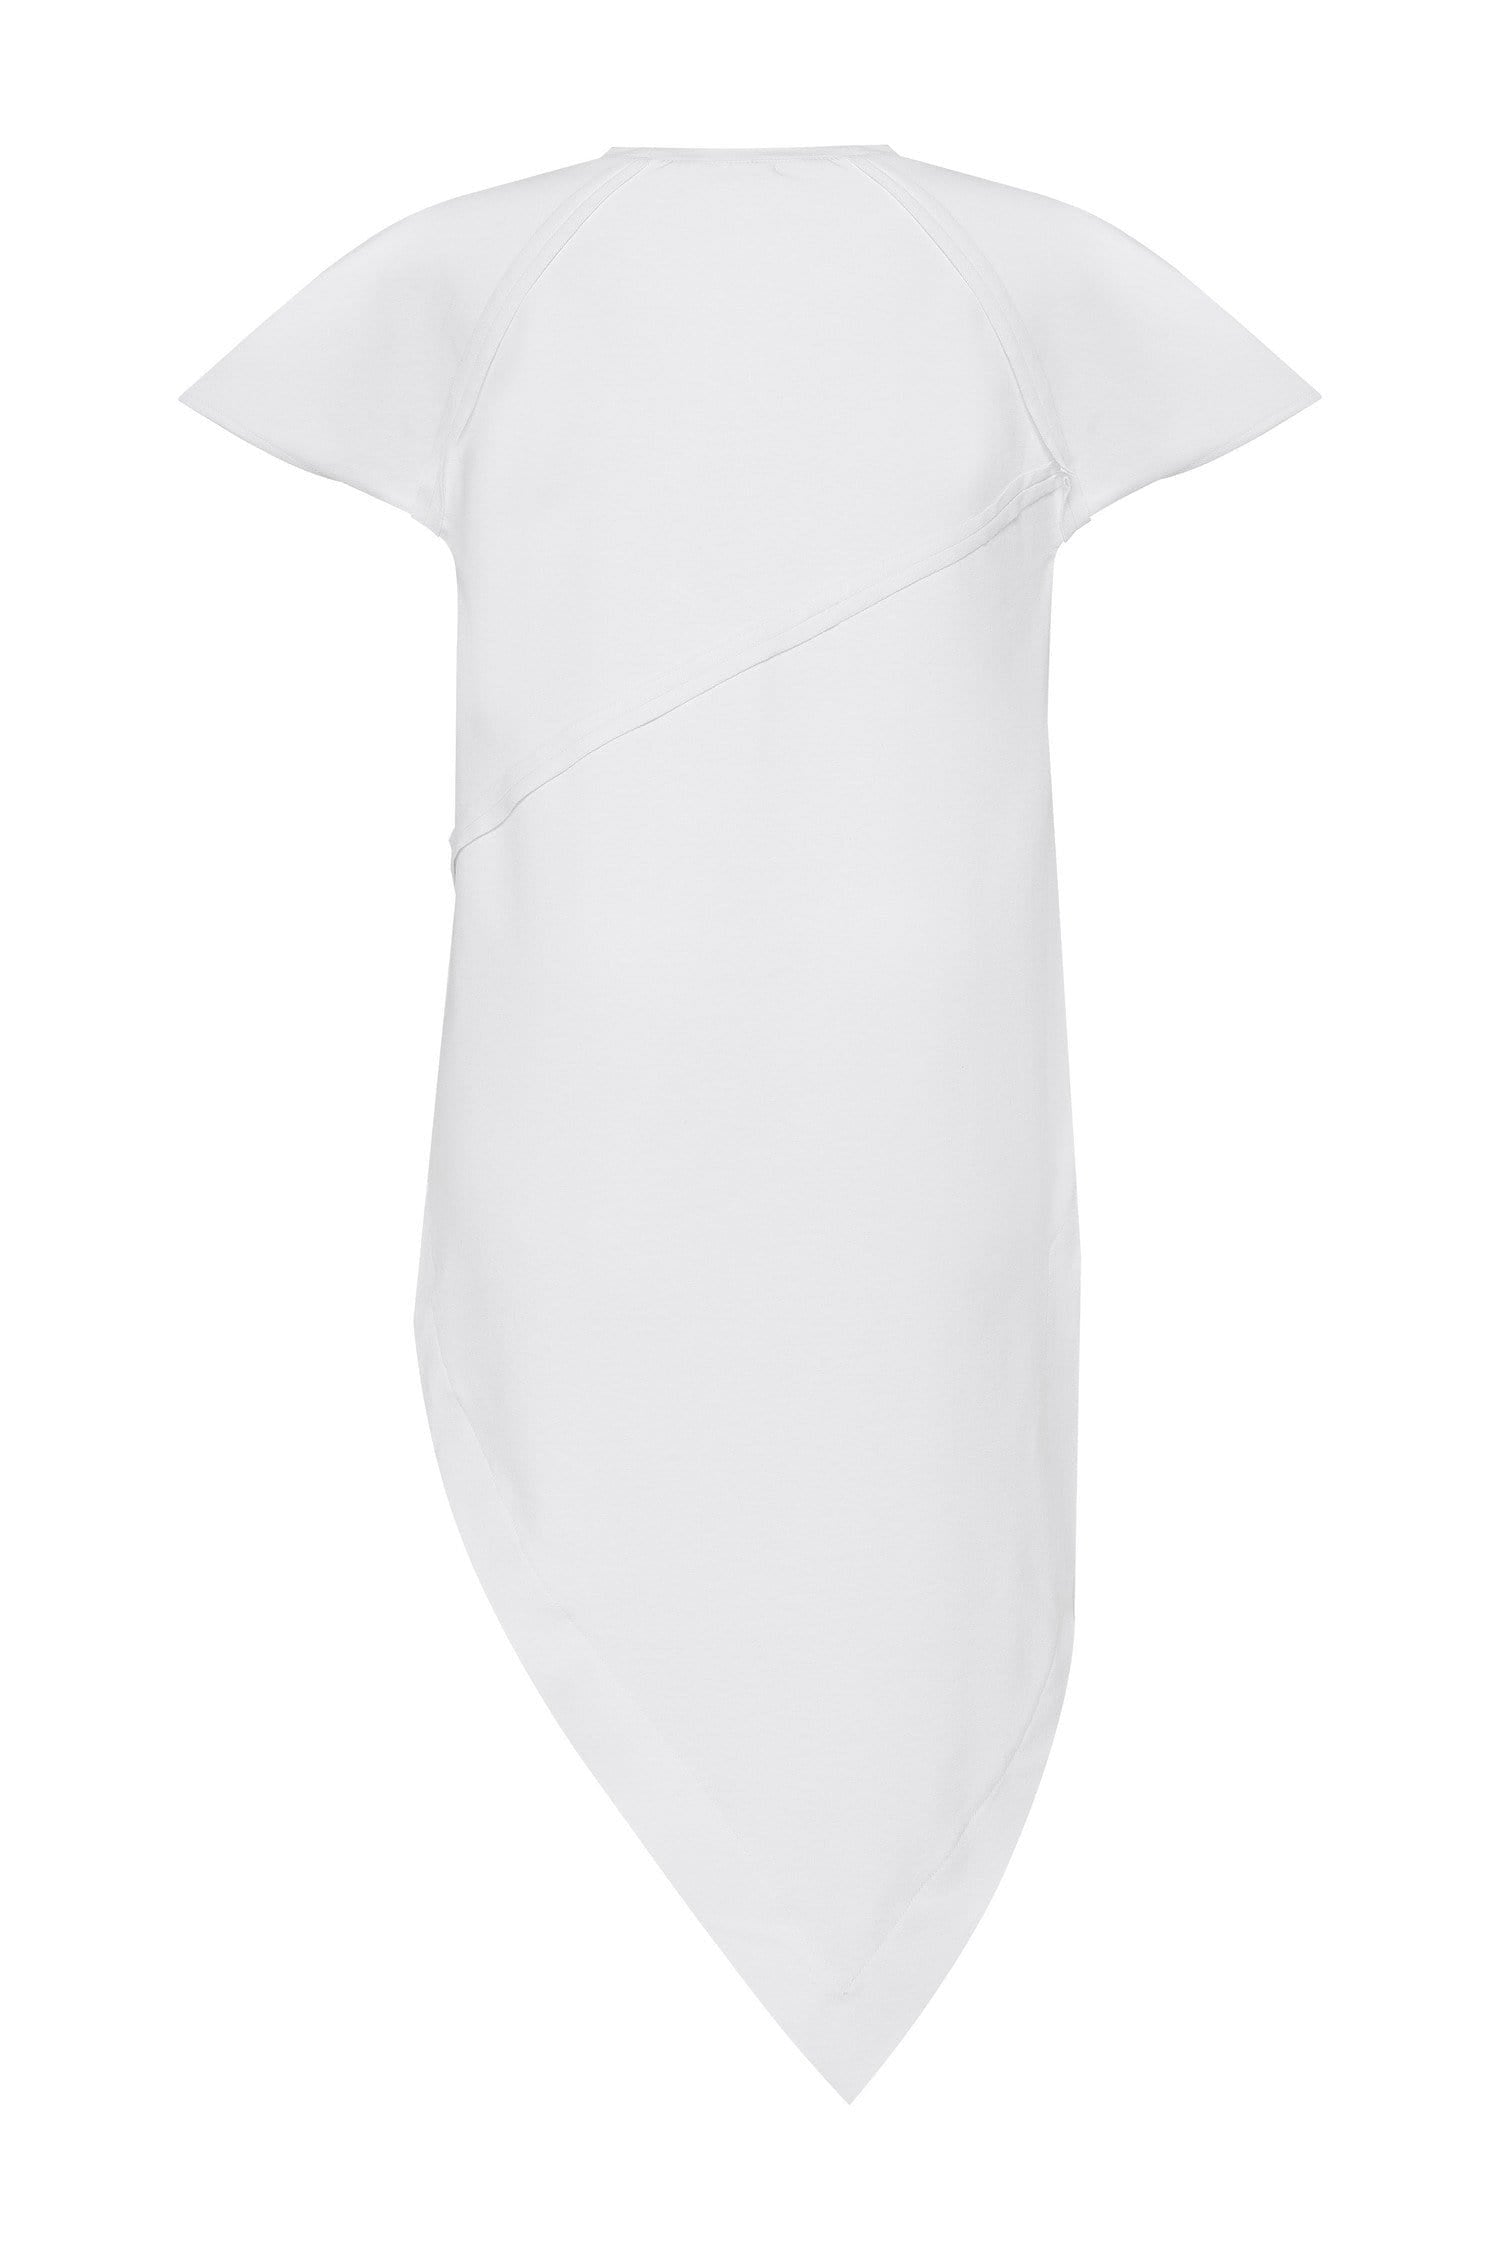 MDNT45 Dresses Asymmetric white T-shirt dress